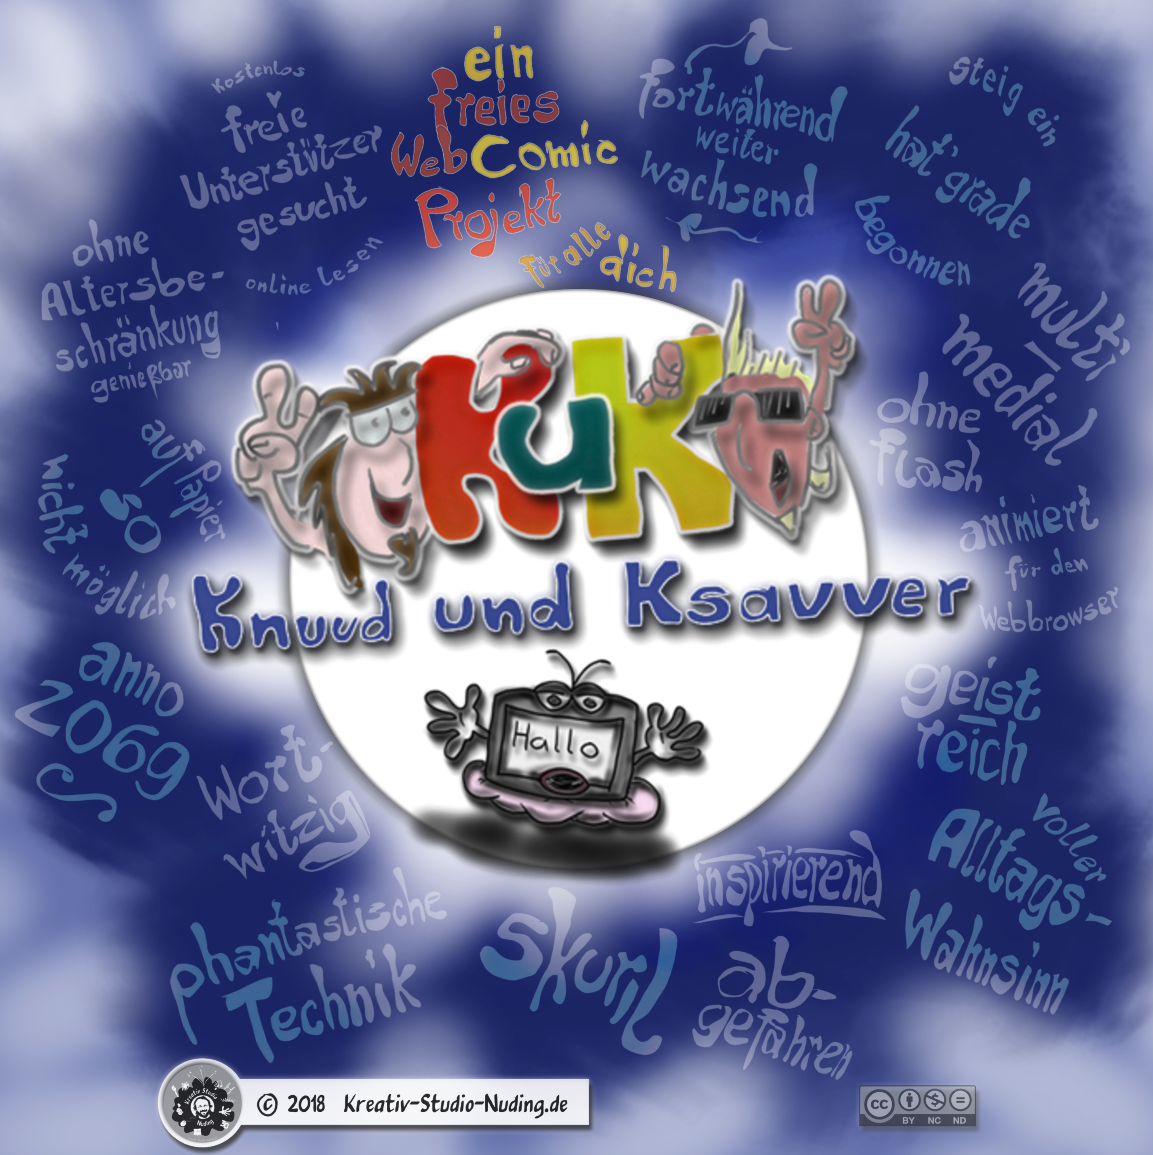 Logo Link zum Onlinelesen des freien Web-Comic-Projekt Knuud & Ksavver